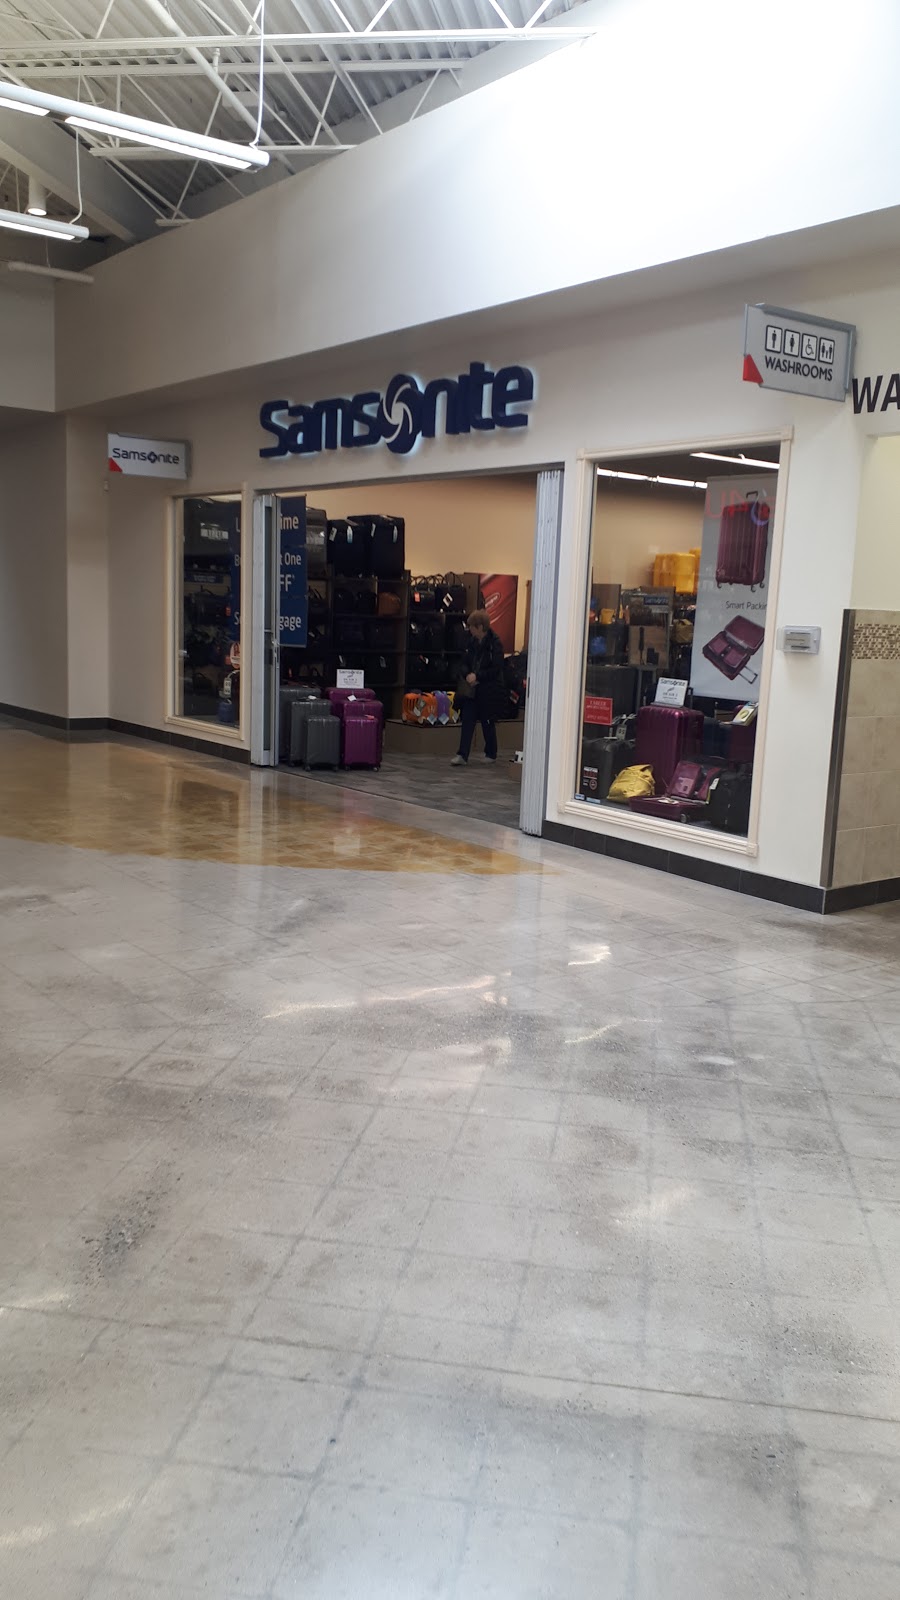 Samsonite Company Store | RR#1, 3311 Simcoe 89 C15-C16, Cookstown, ON L0L 1L0, Canada | Phone: (705) 458-1443